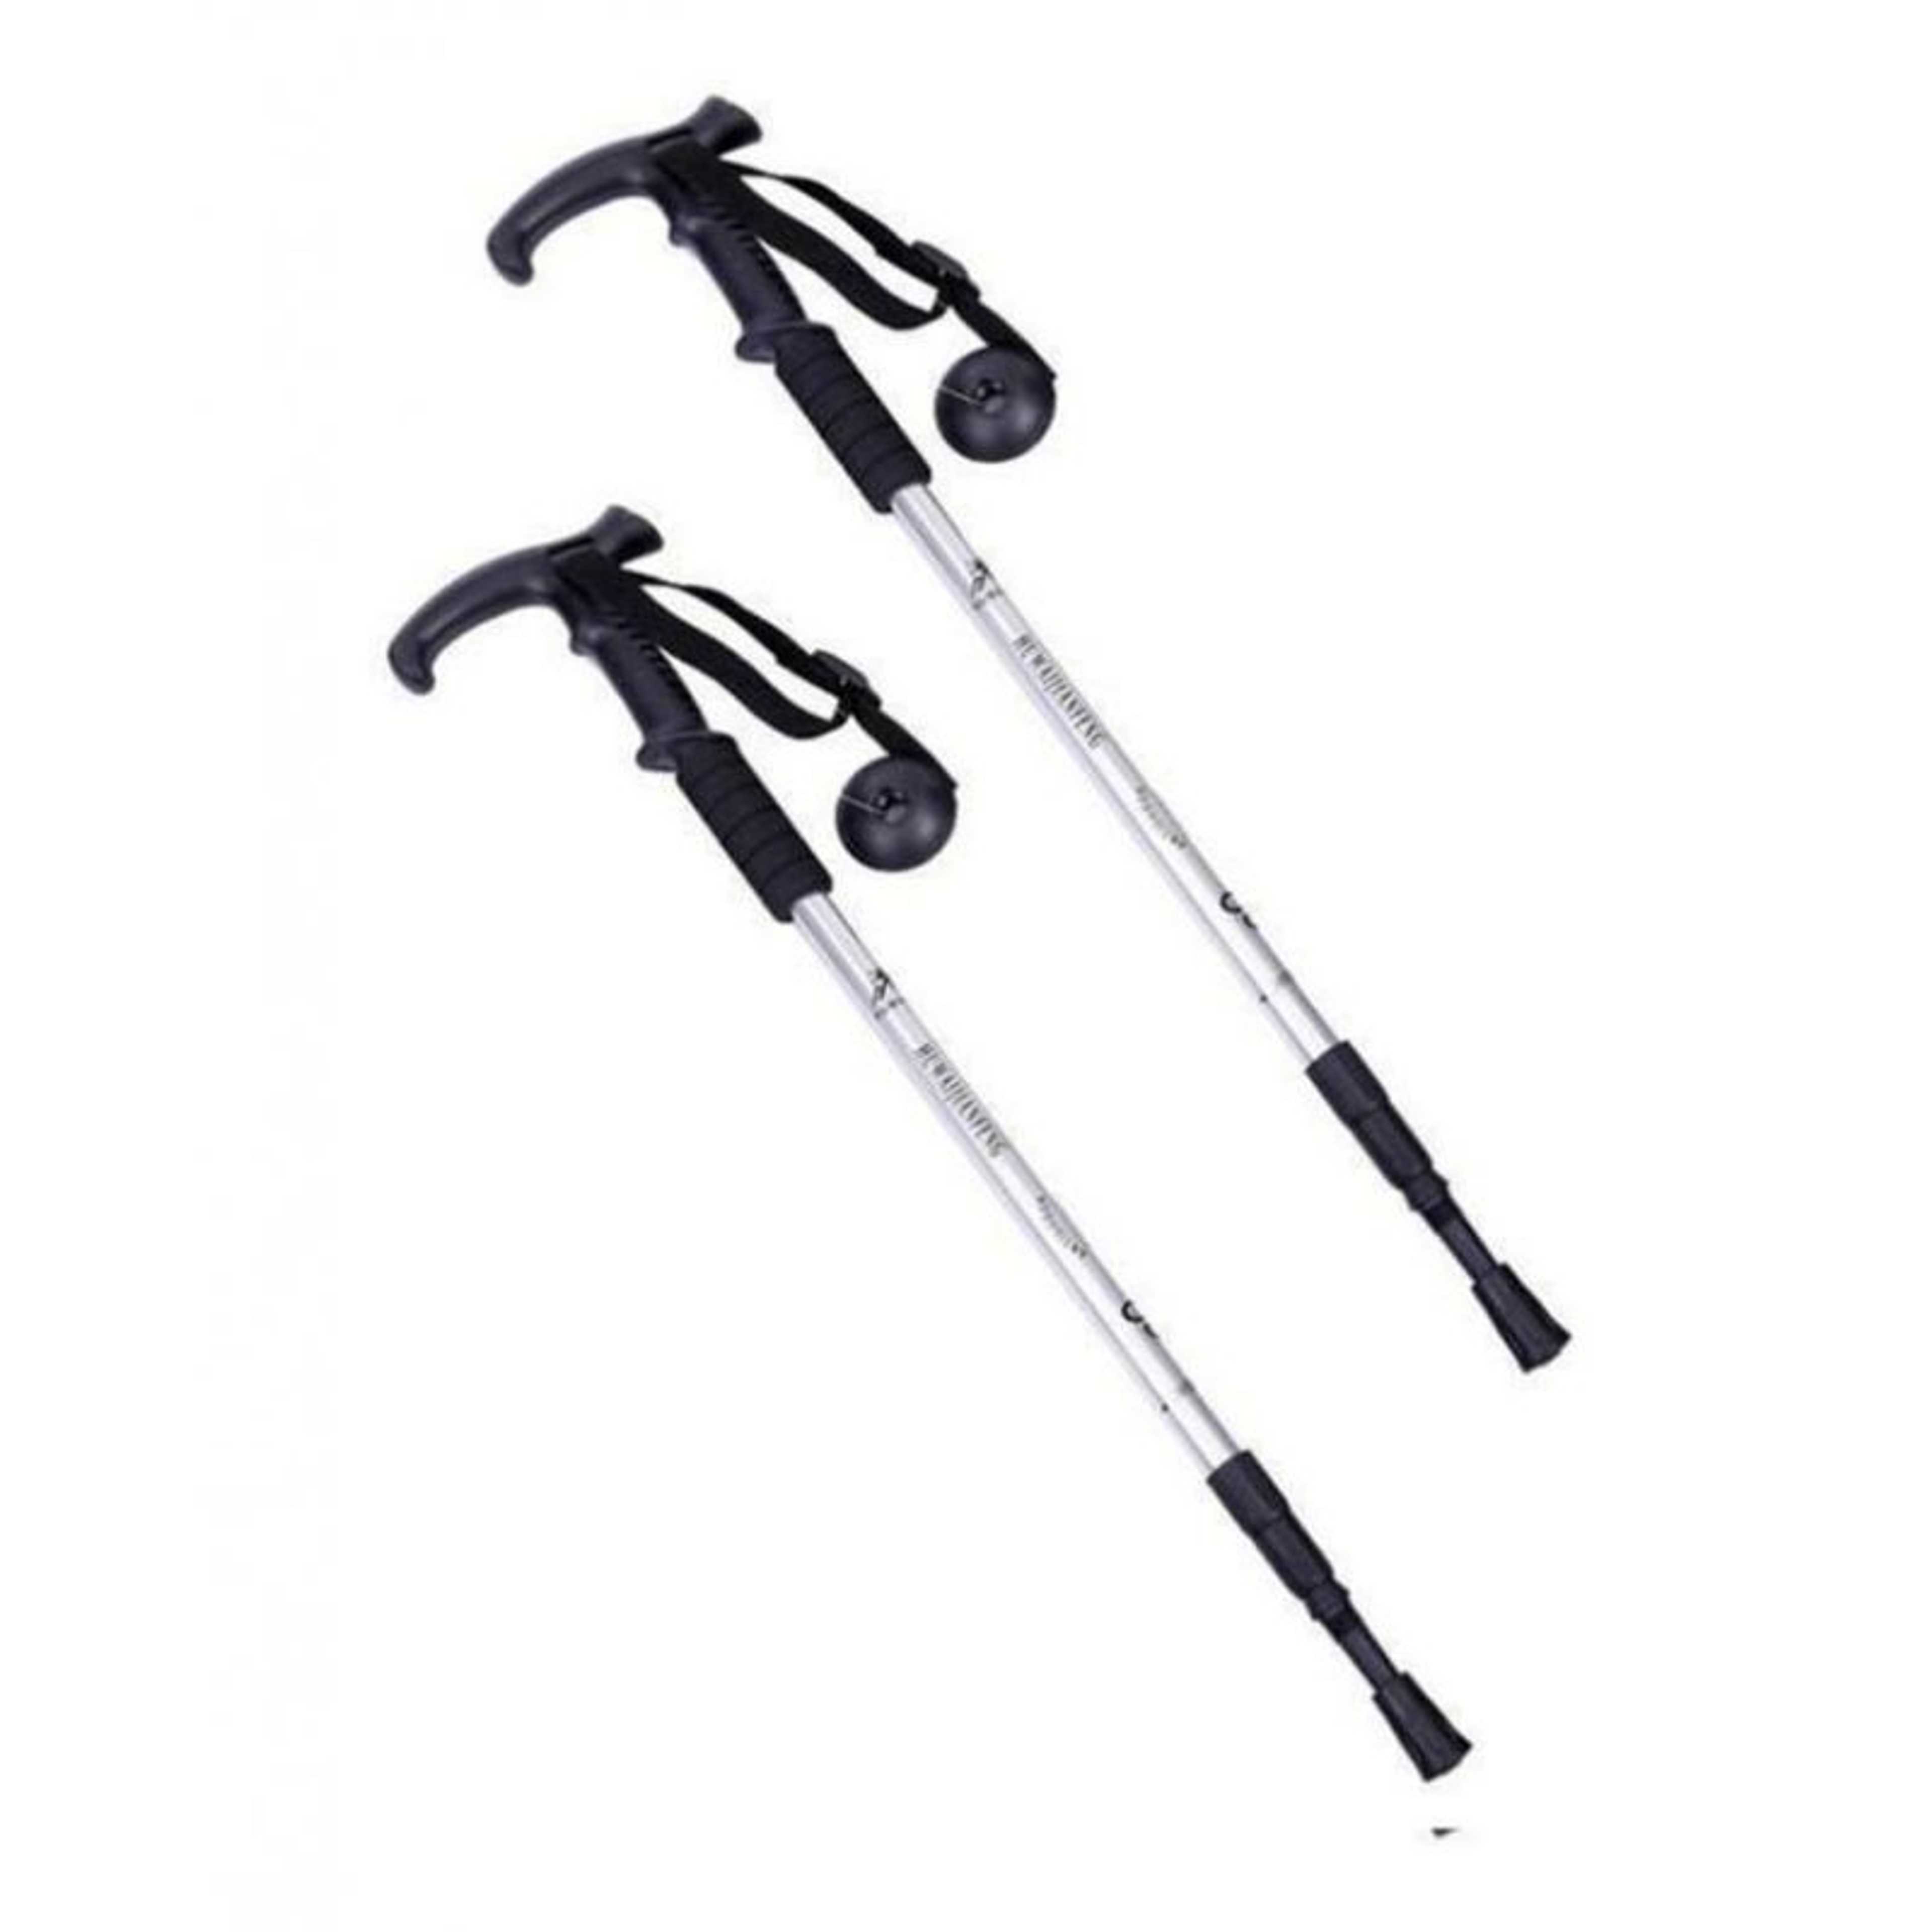 Package Of 2: Lightweight Trekking Pole Adjustable Telescopic Walking Stick 3 Section Hiking Sticks Alpenstock Anti-Shock Ivory White